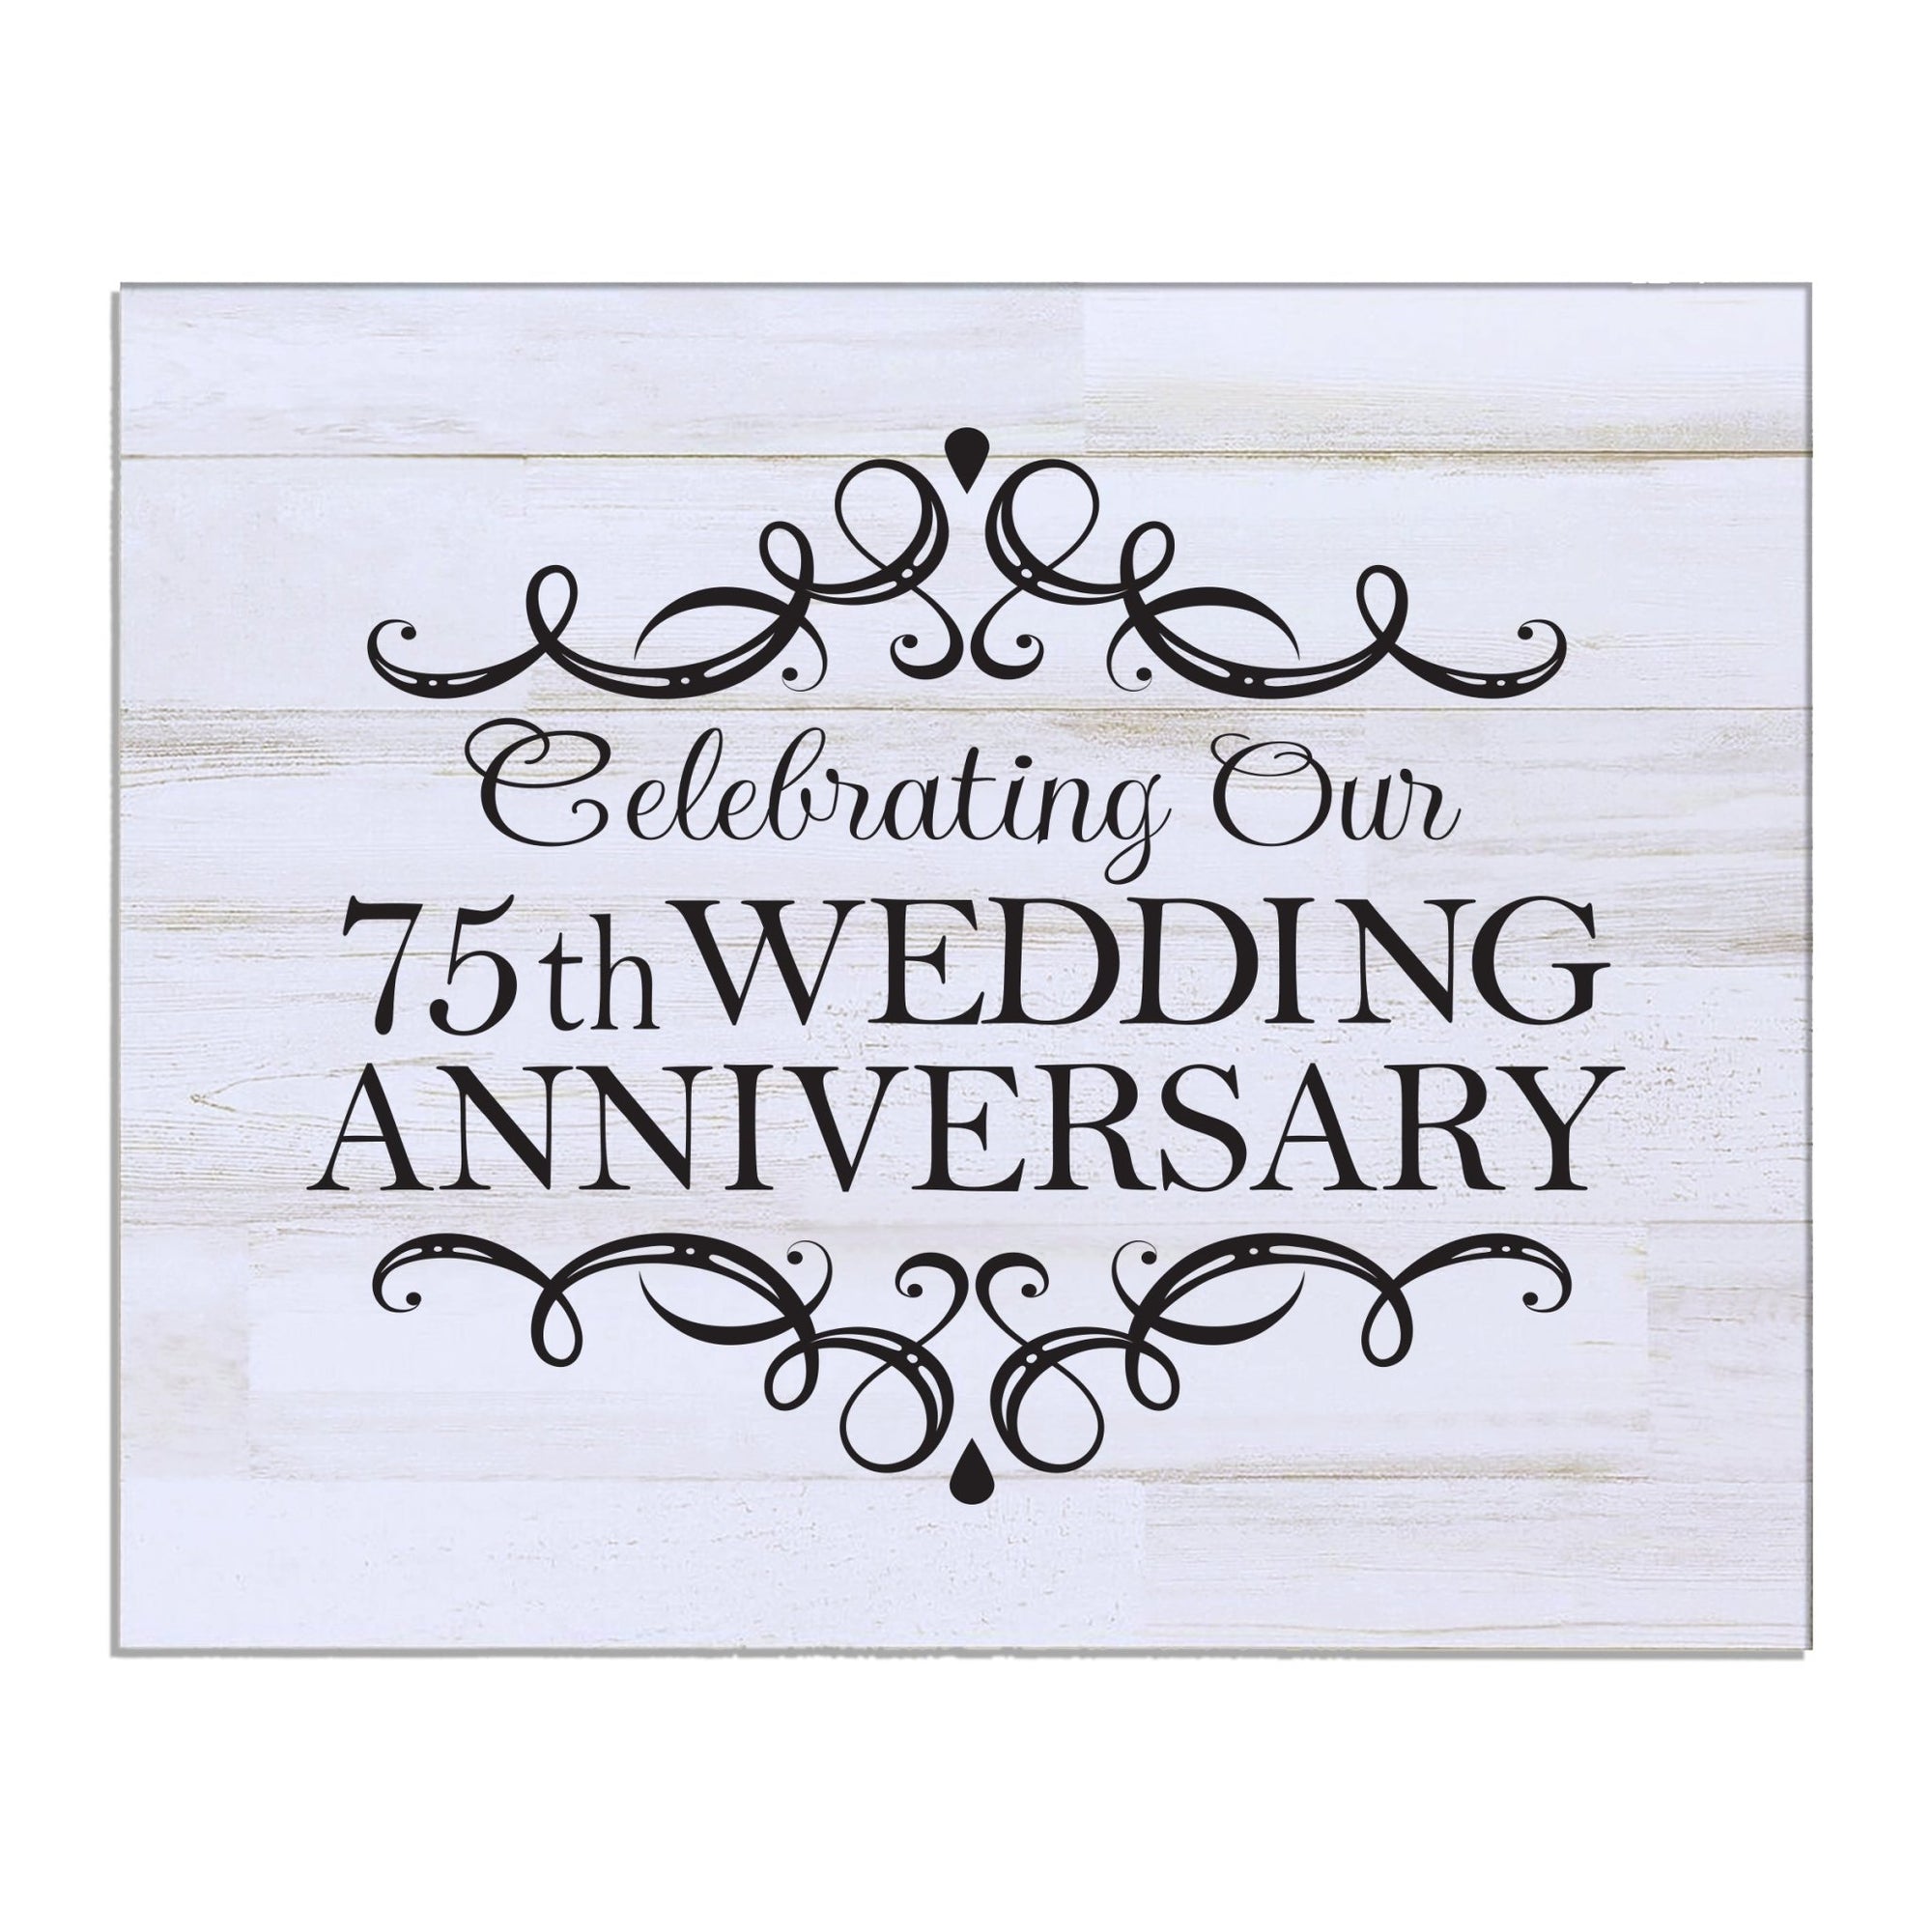 75th Wedding Anniversary Wall Plaque - Celebrating - LifeSong Milestones